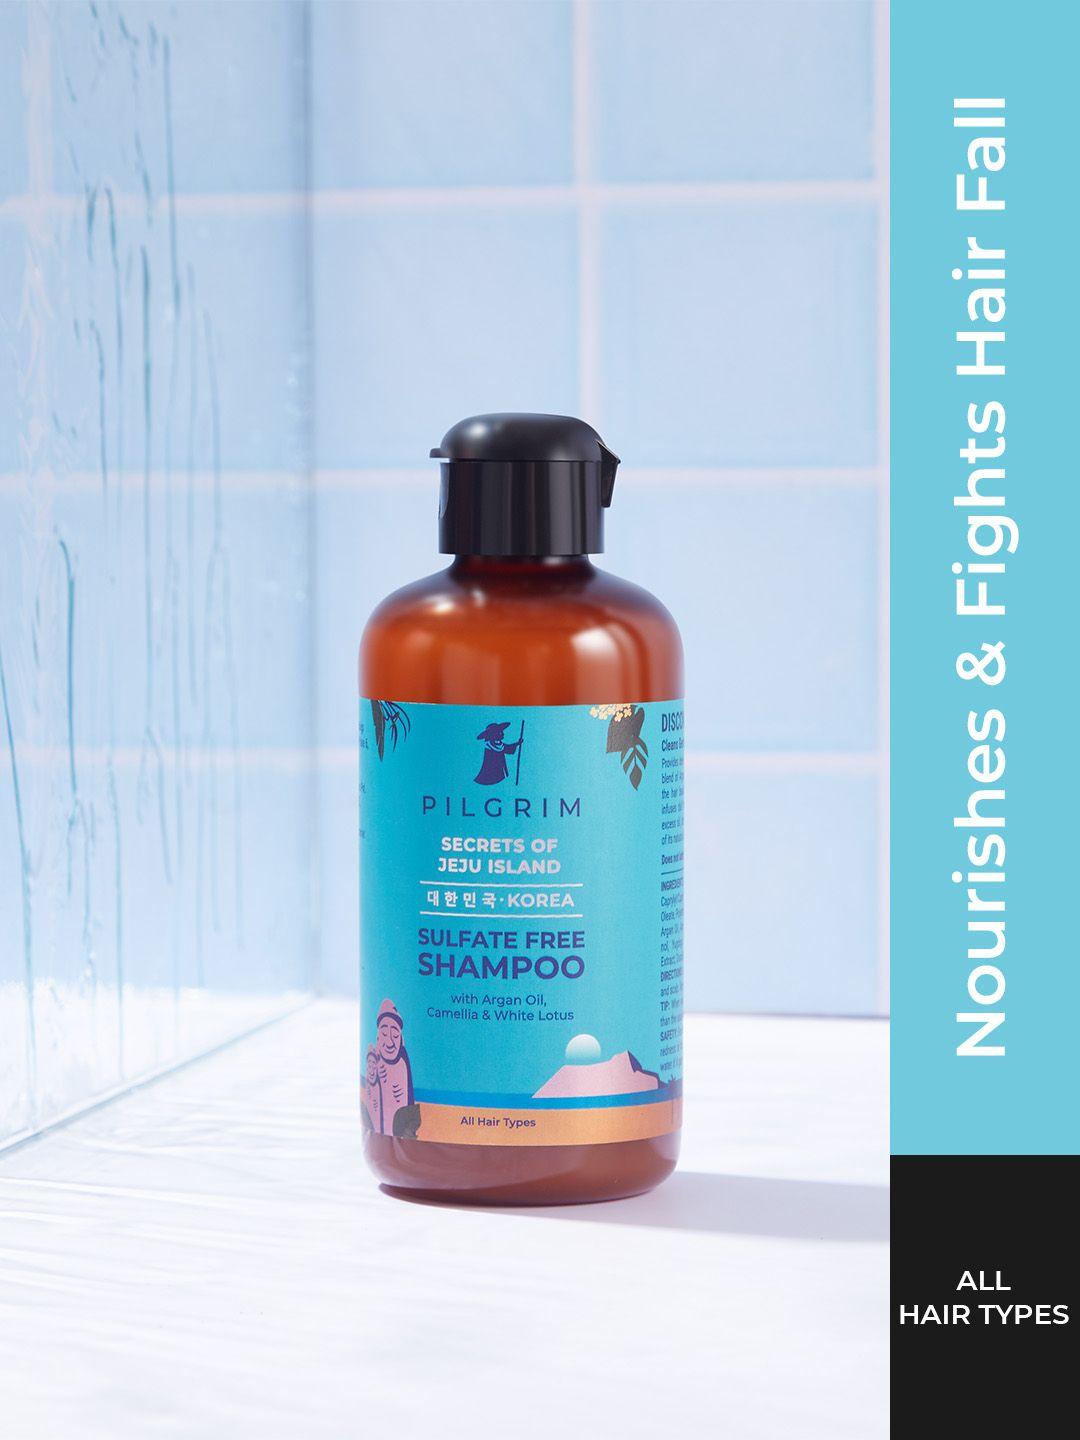 pilgrim sulfate free shampoo with argan oil, camellia & white lotus for dry & frizzy hair